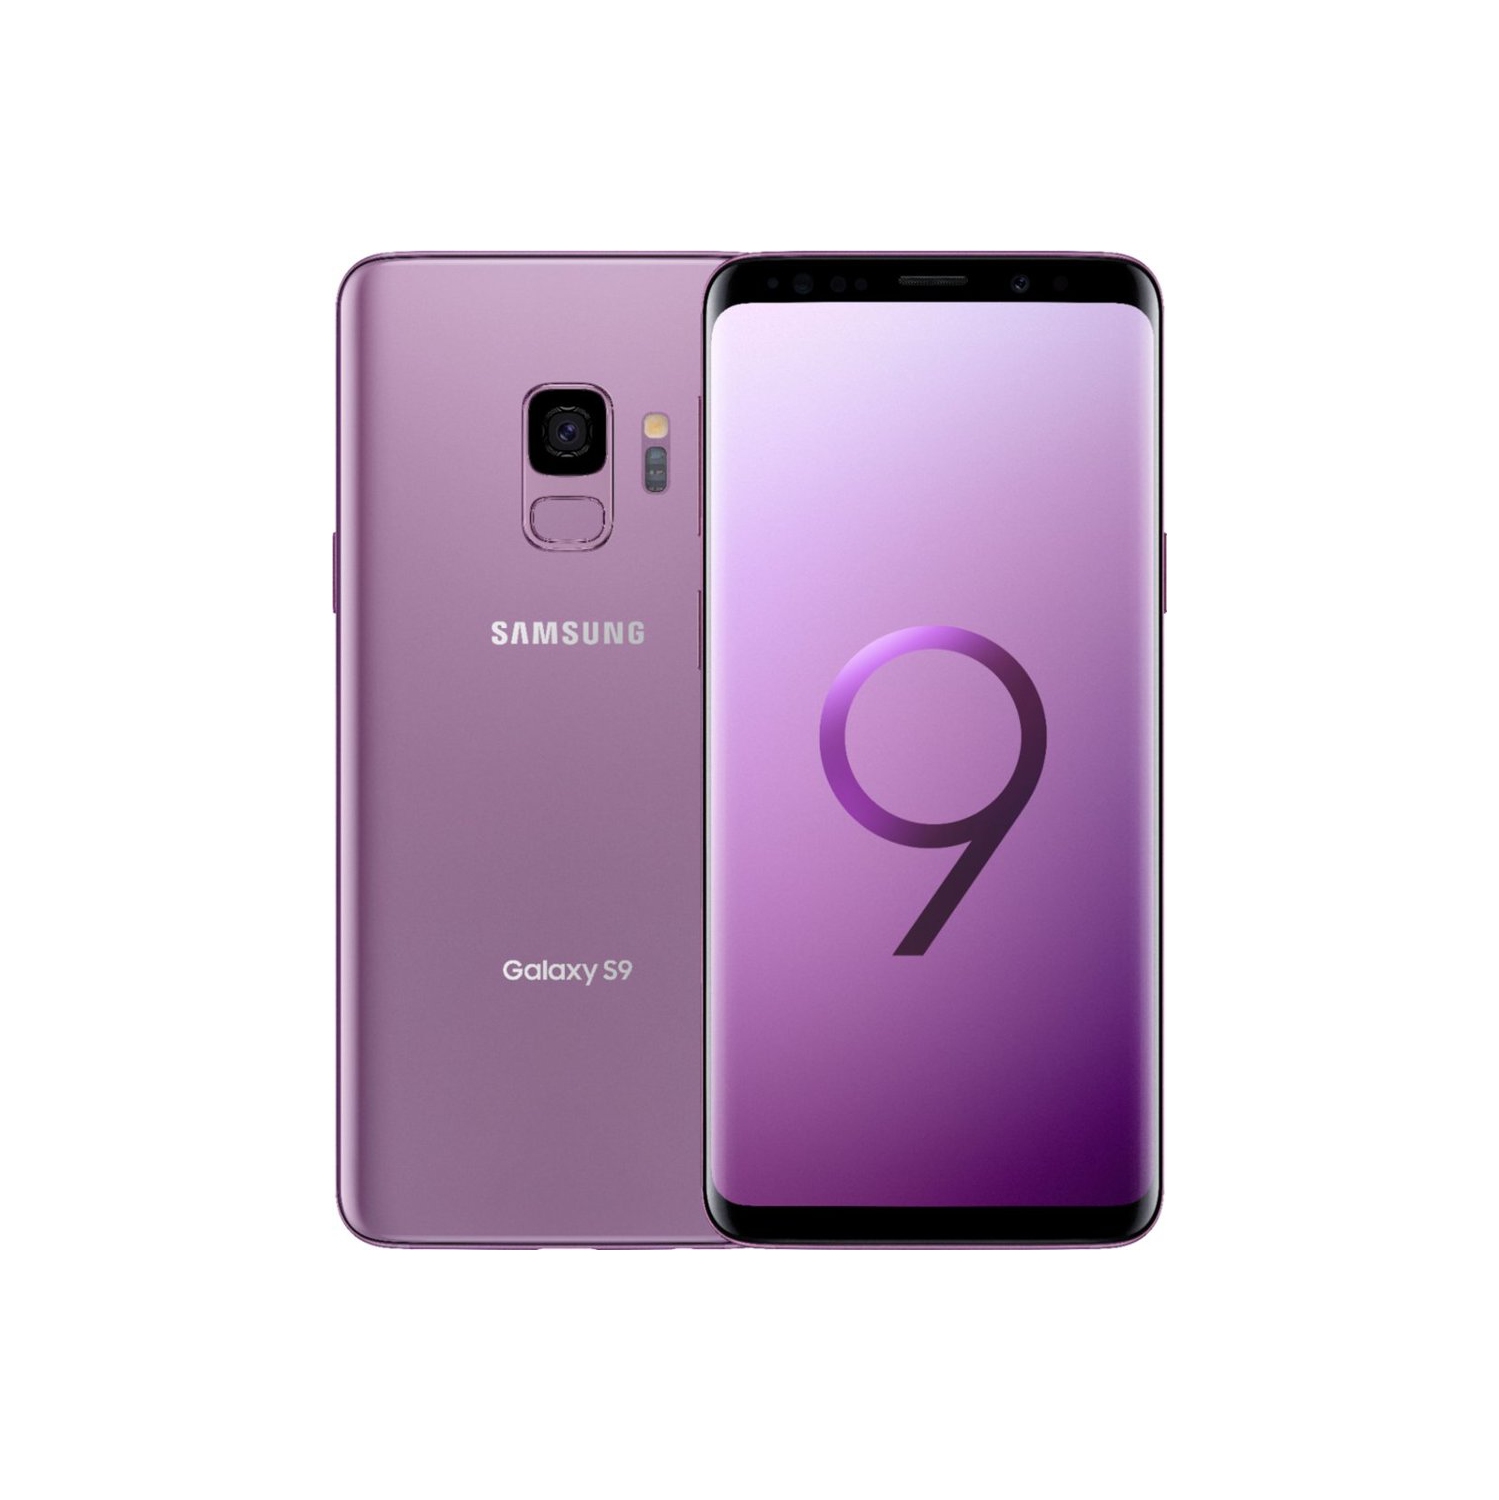 Refurbished (Excellent) - Samsung Galaxy S9 64GB Smartphone - Lilac Purple - Unlocked - Certified Refurbished